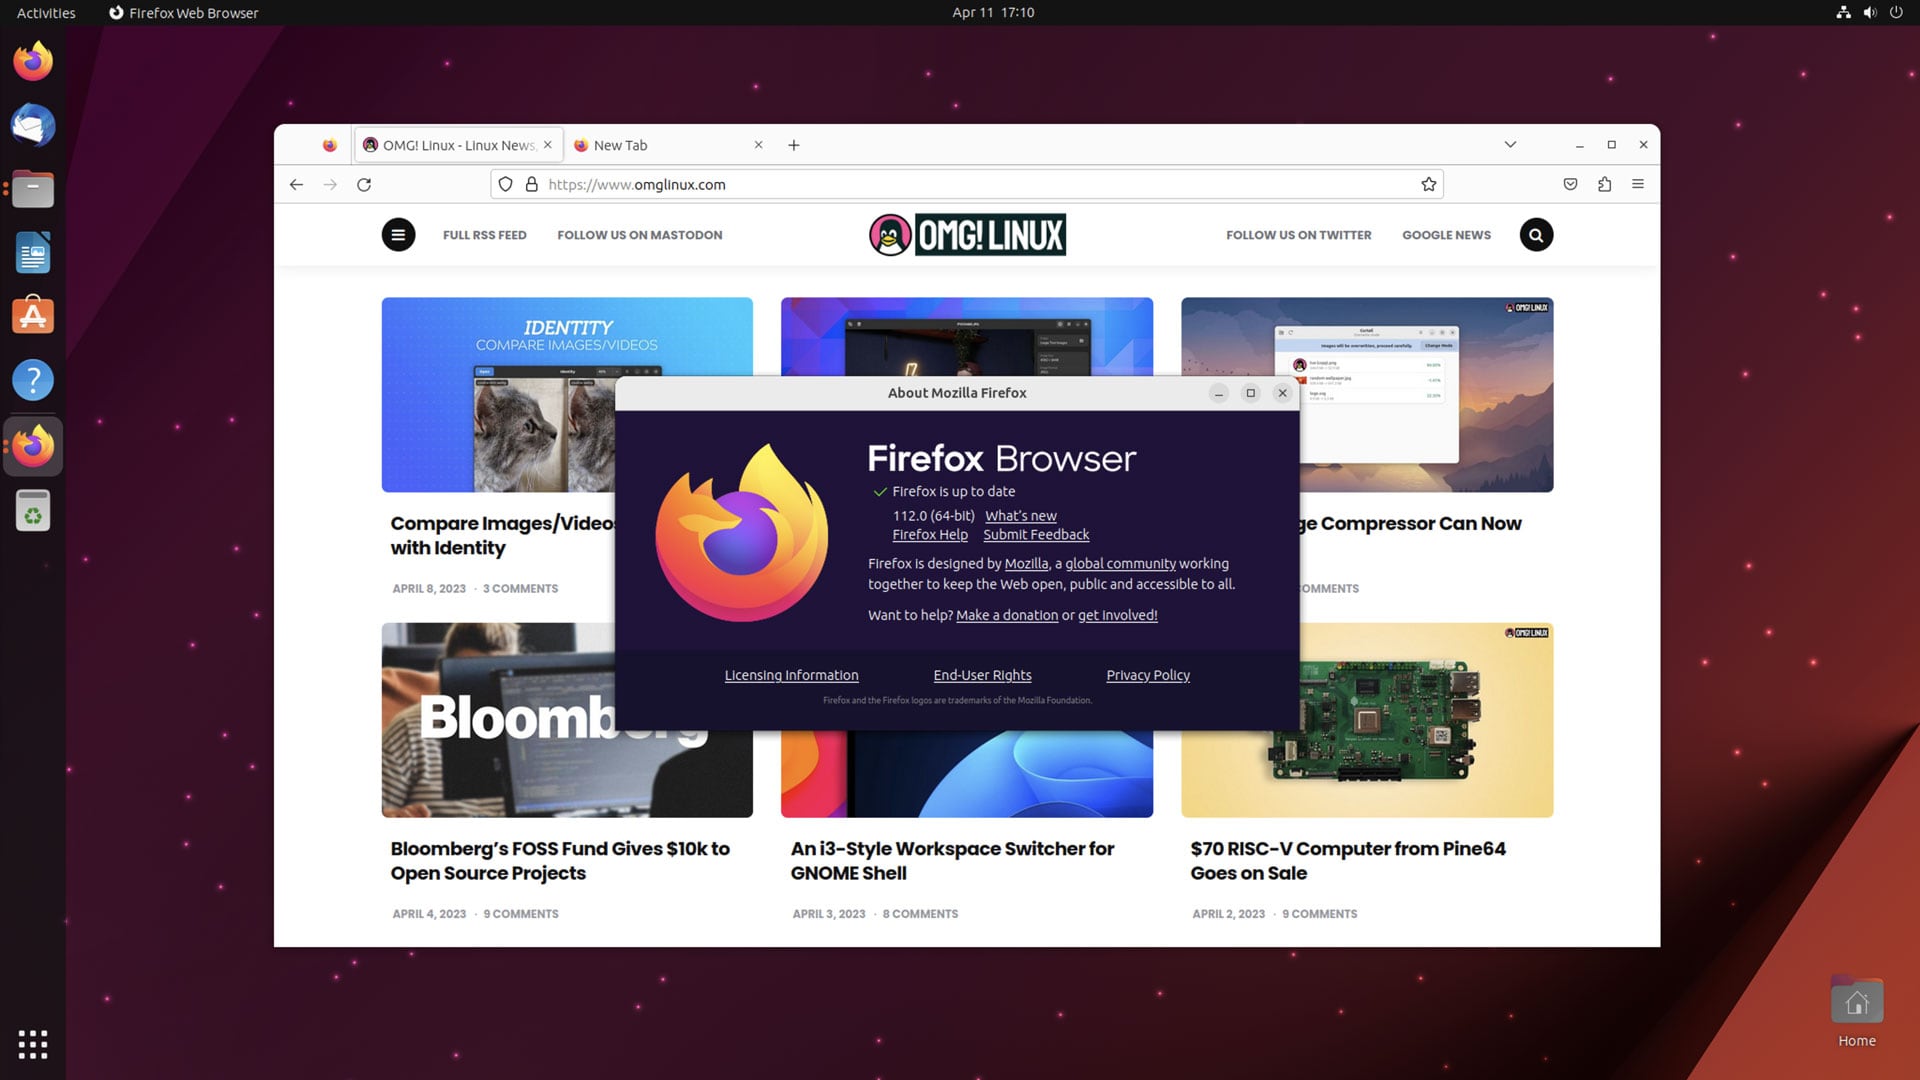 Download Firefox for Desktop — Mozilla (UK)